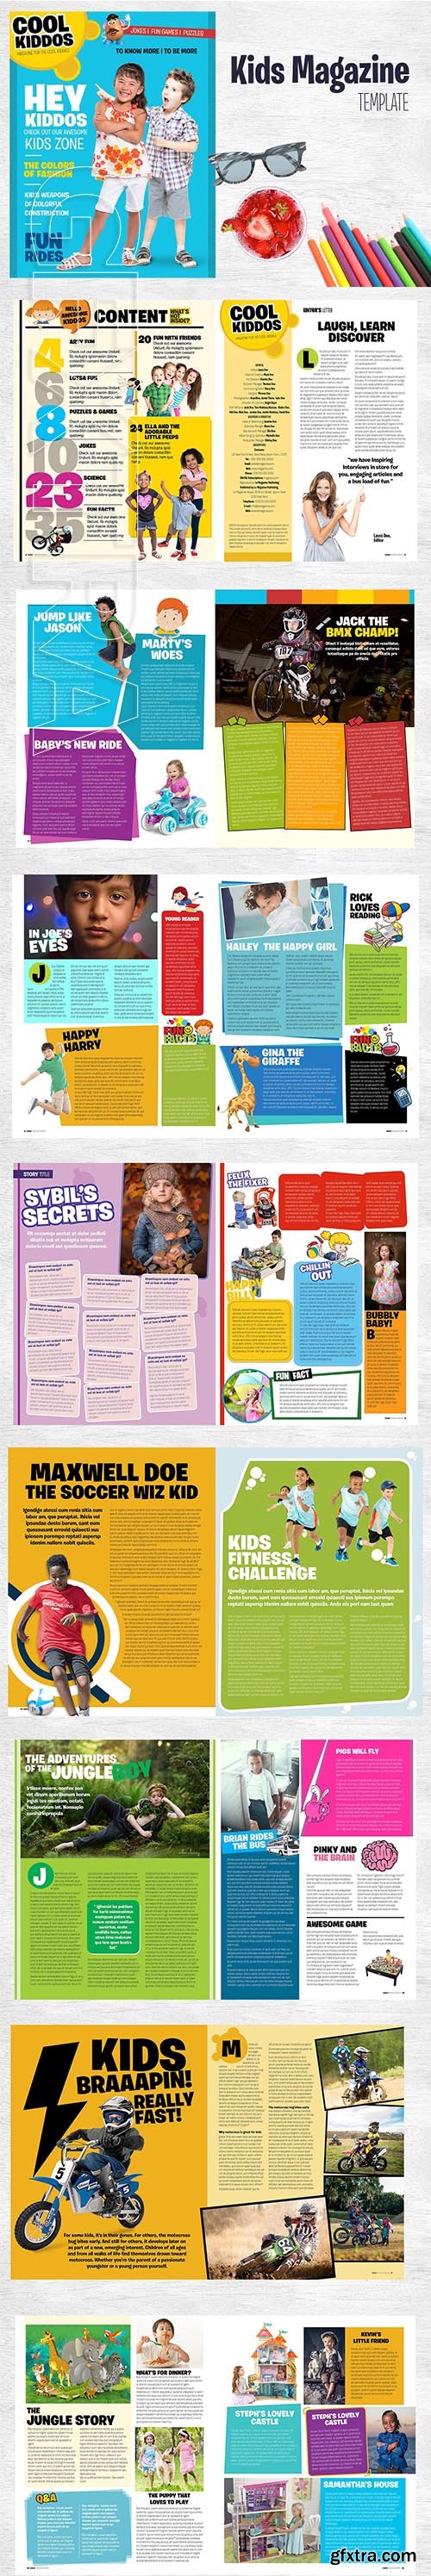 CreativeMarket - Kids Magazine Template 3152872